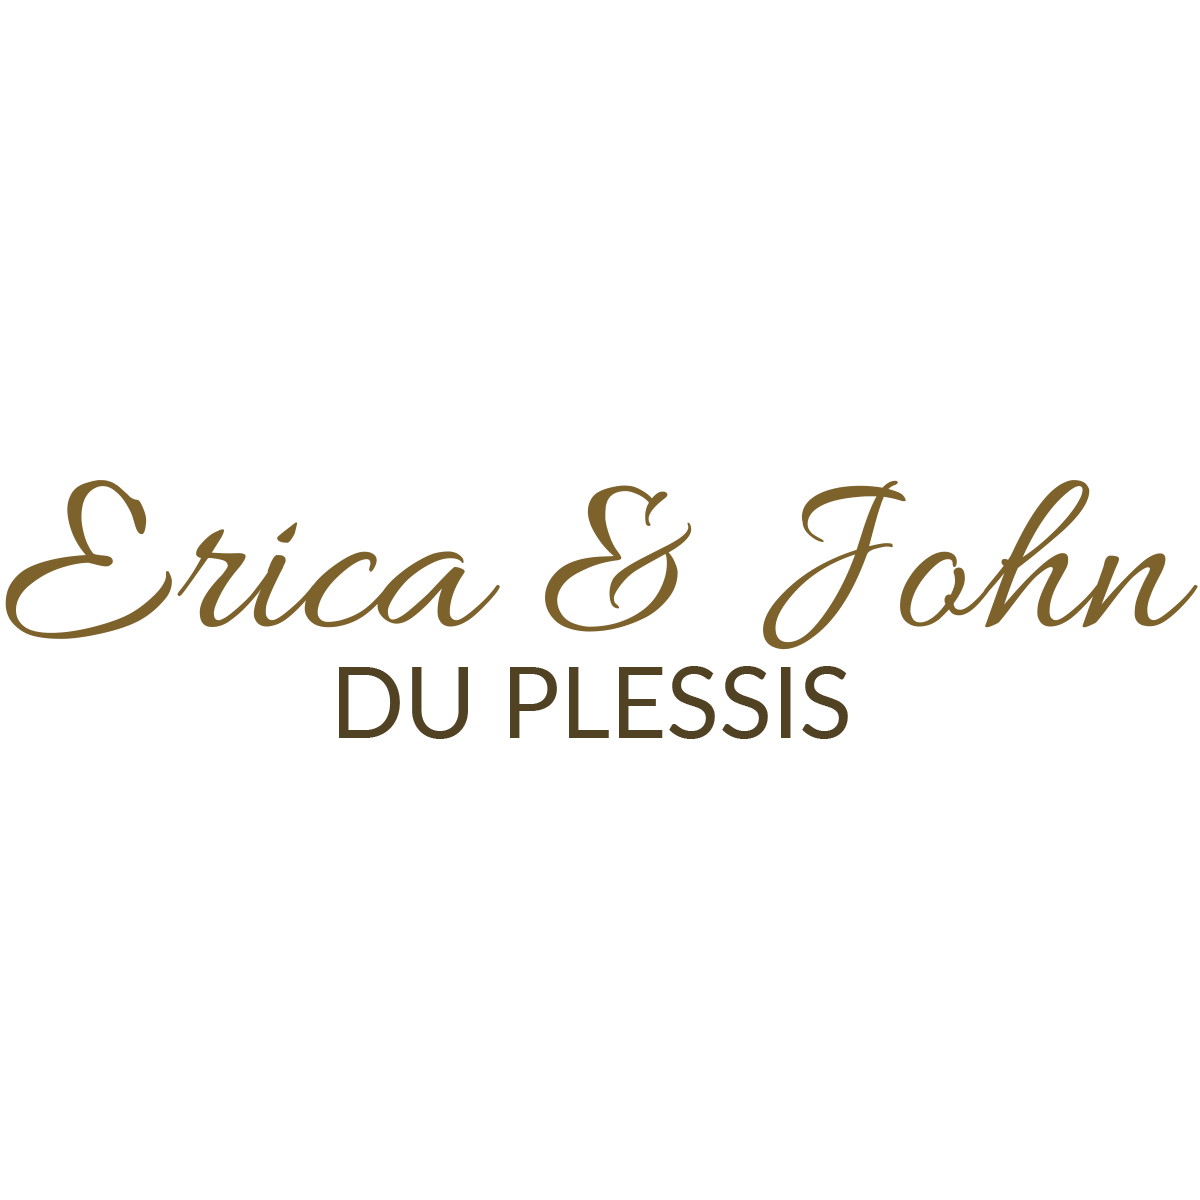 Erica and John du Plessis logo